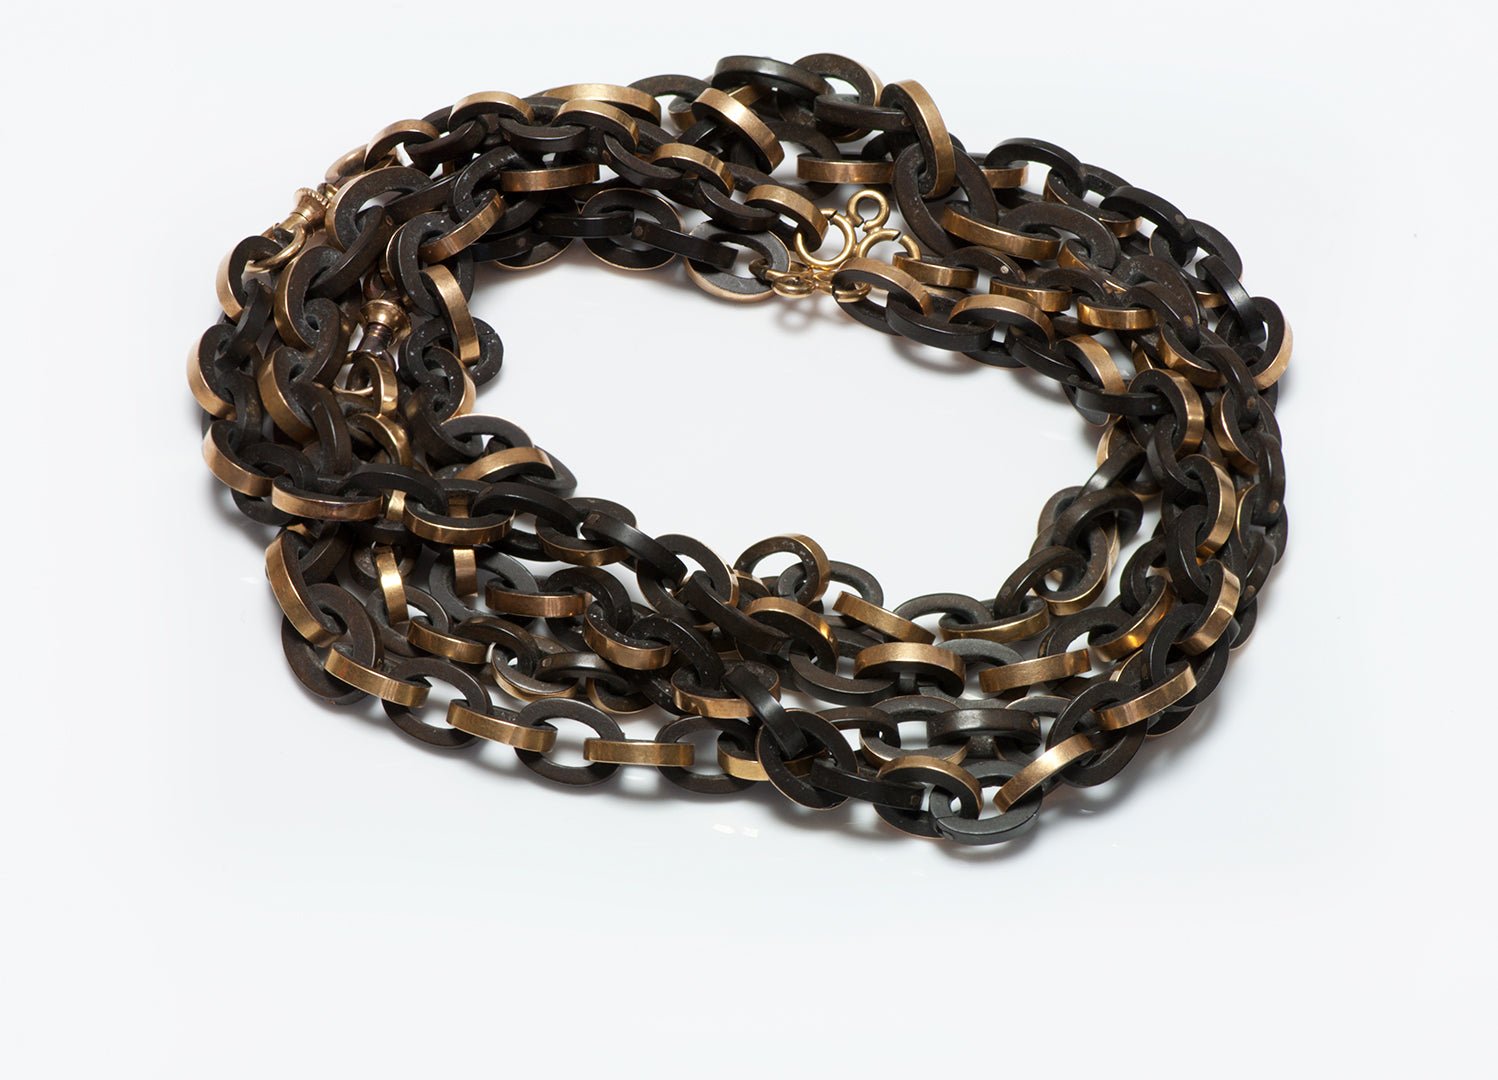 Antique Gold Gutta Percha Chain Link Necklace